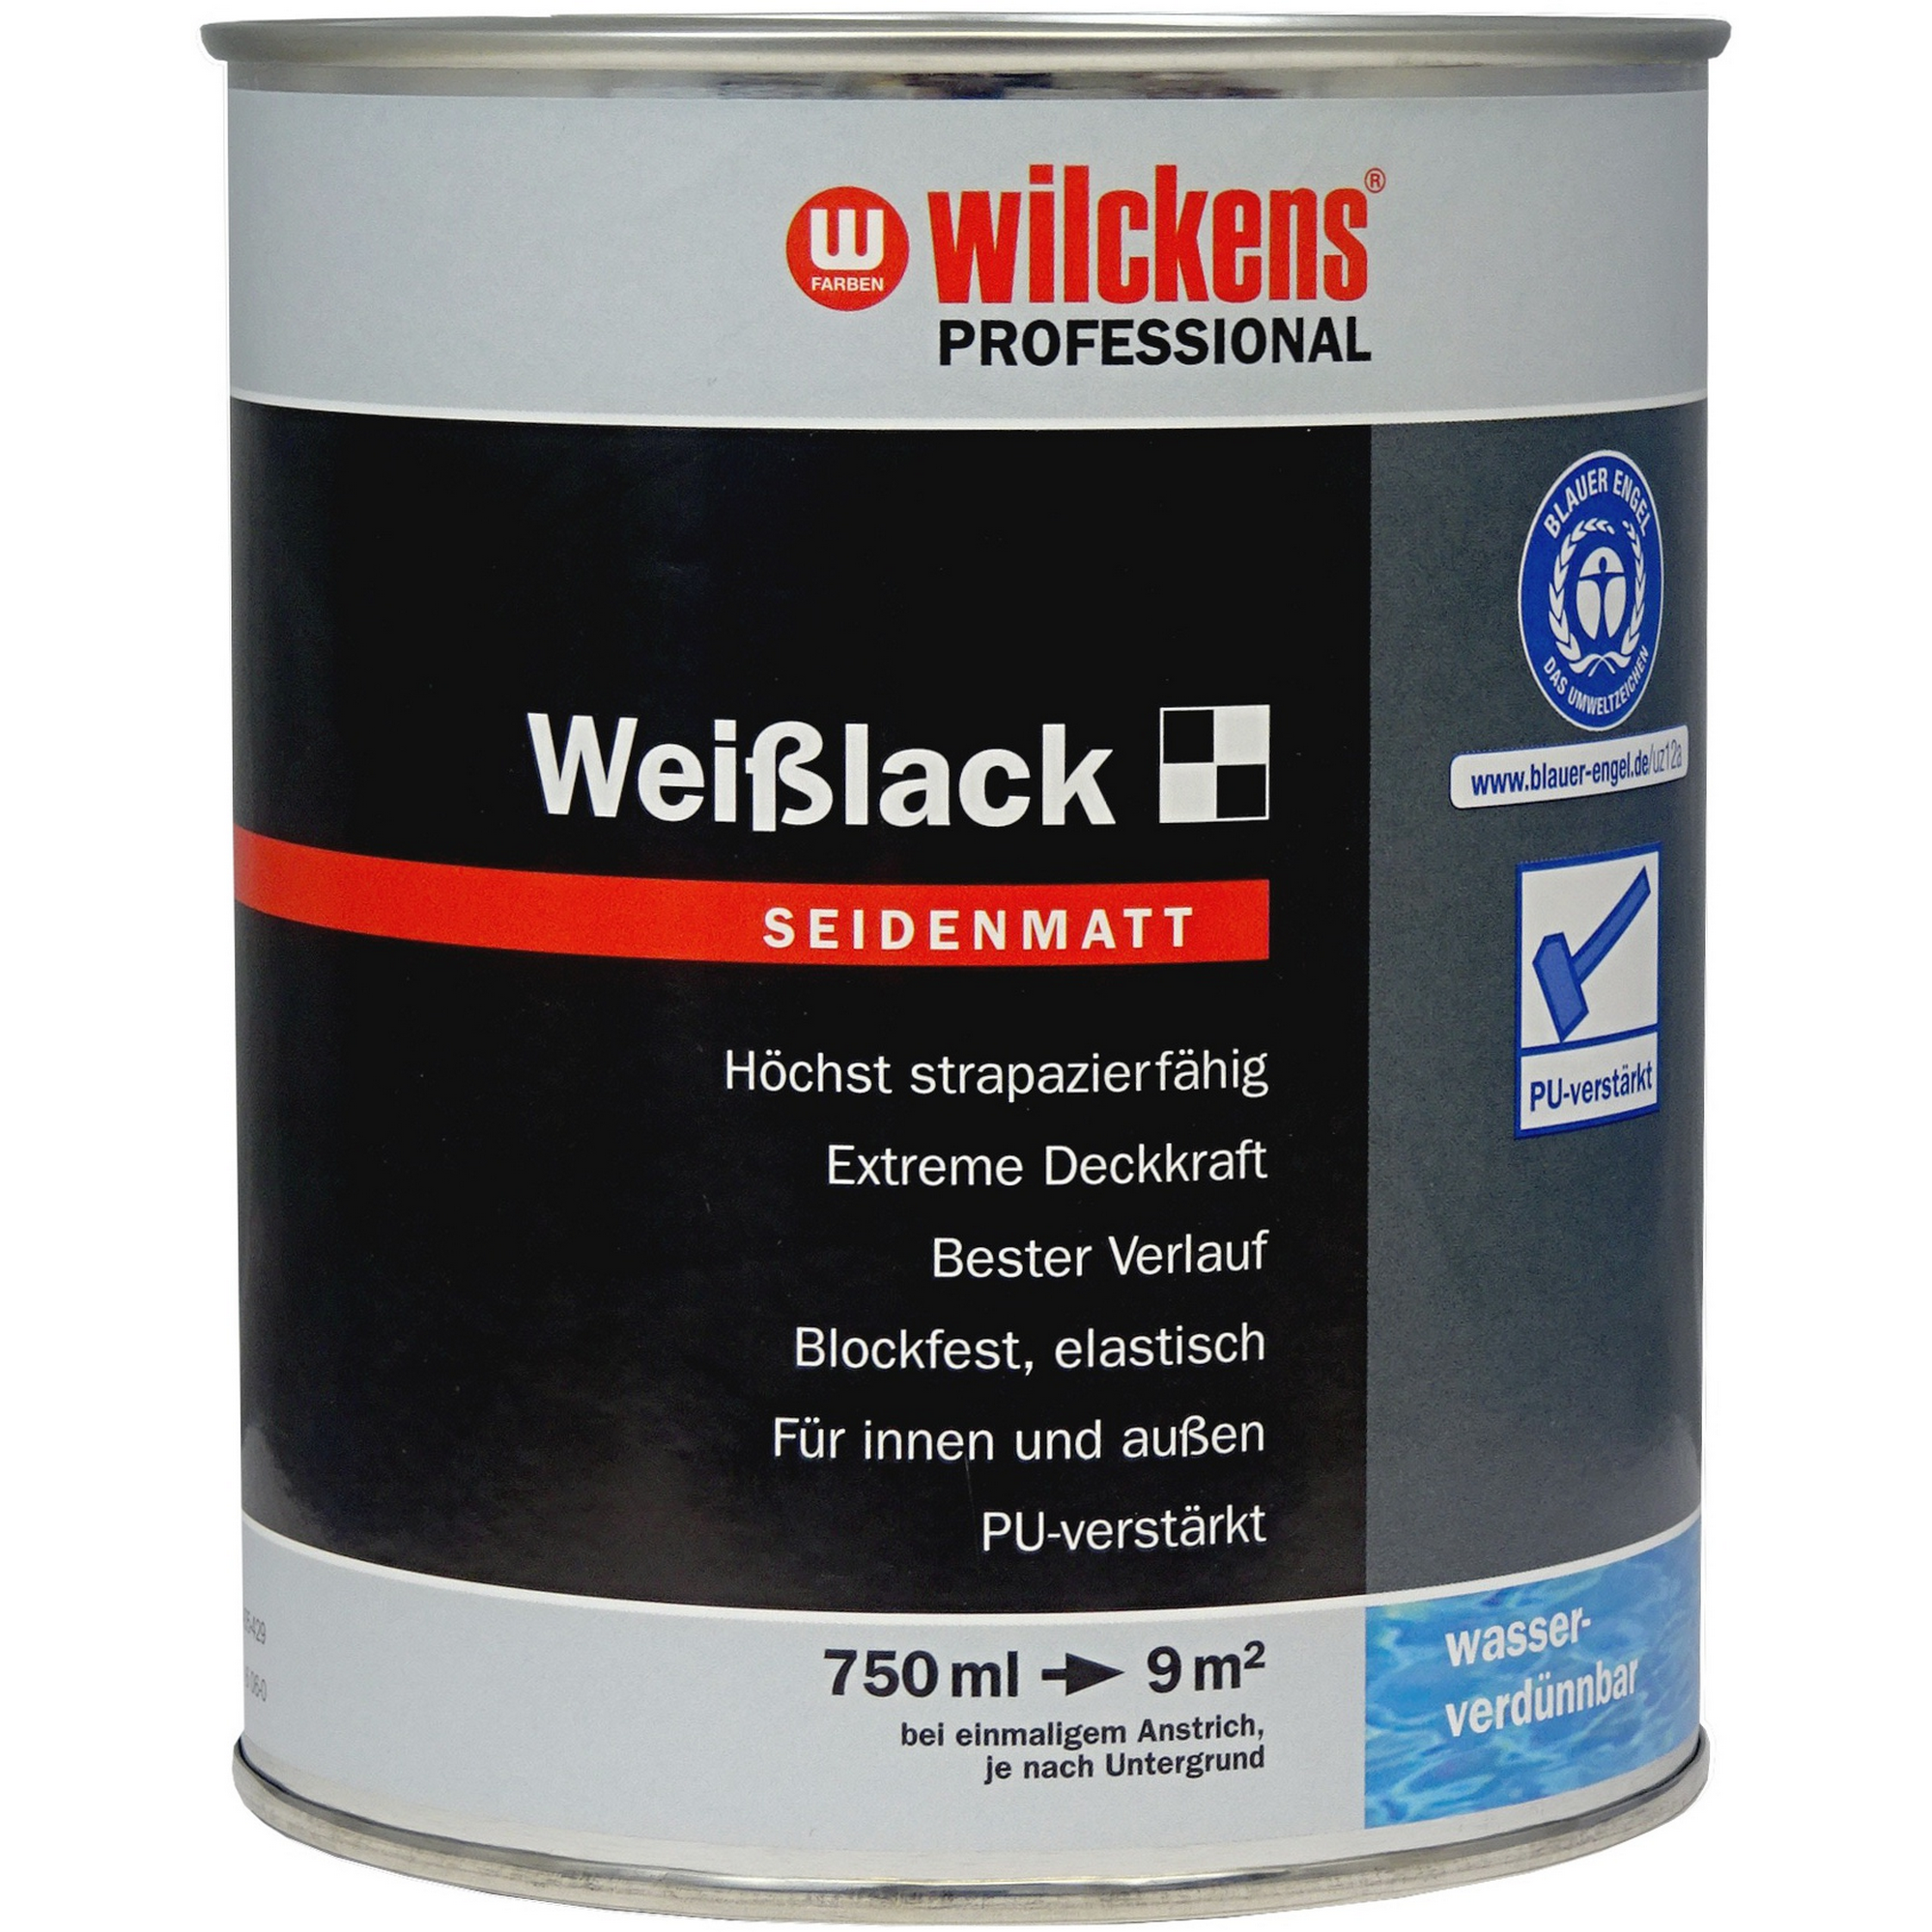 Weißlack 'Professional' weiß seidenmatt 750 ml + product picture